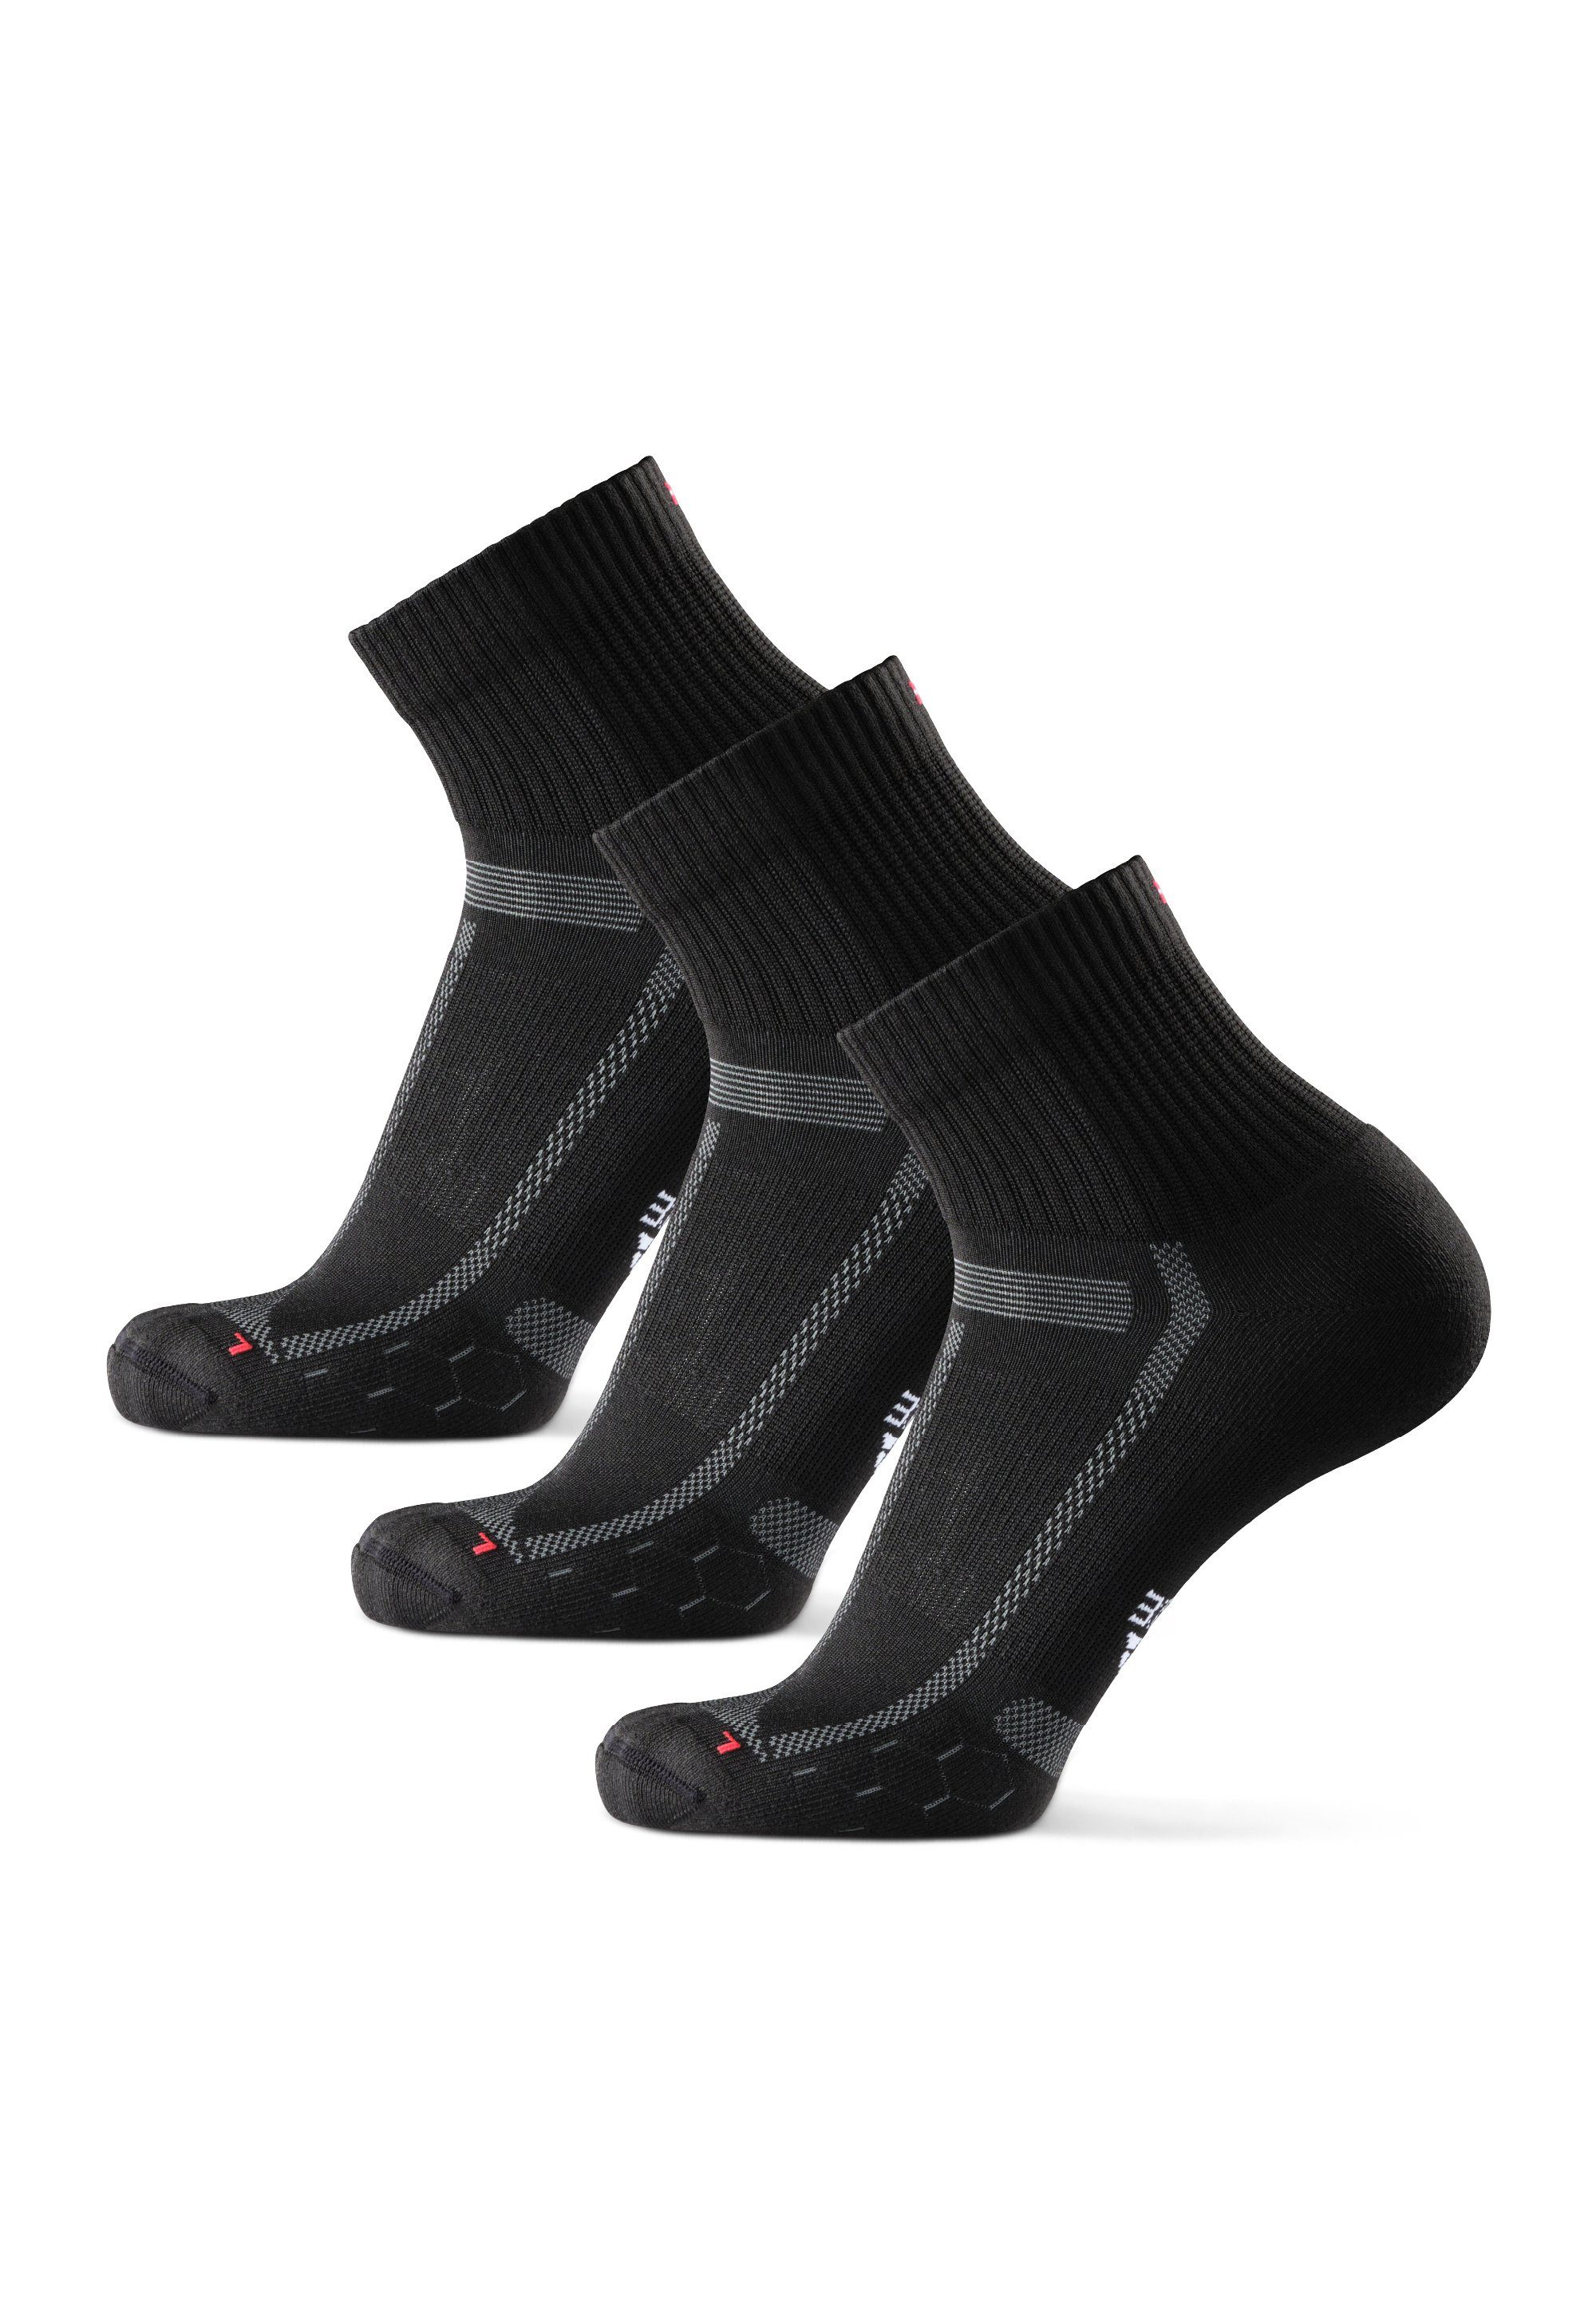 DANISH ENDURANCE Laufsocken Long Distance Running Socks Black/Grey Anti-Blasen, (Packung, 3-Paar) Technisch